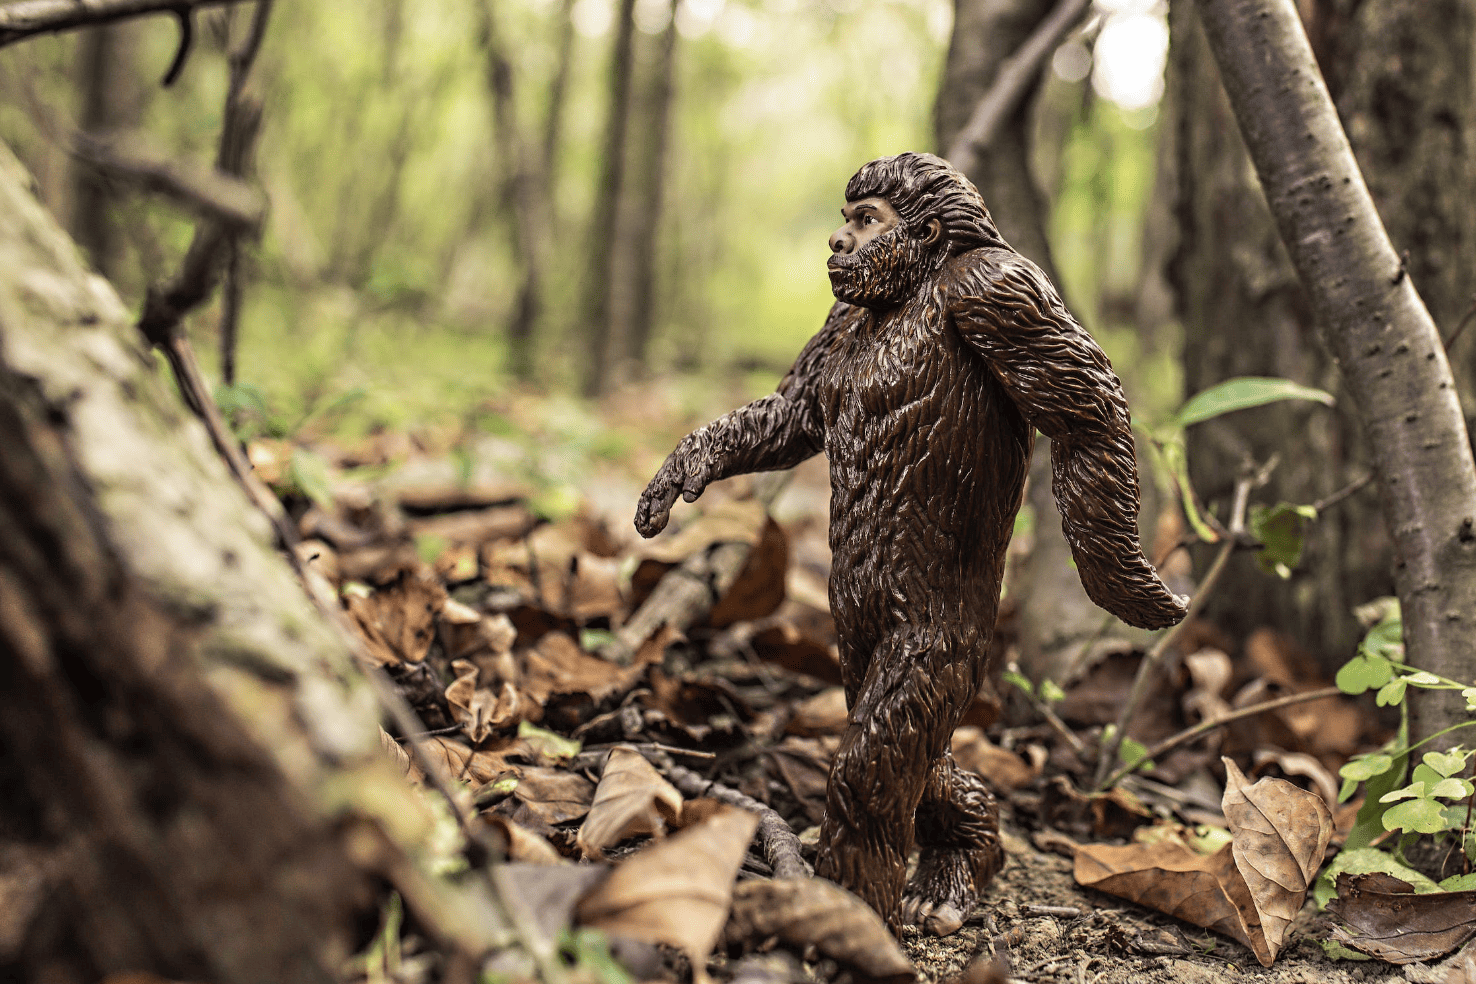 Bigfoot toy walking outdoors in nature